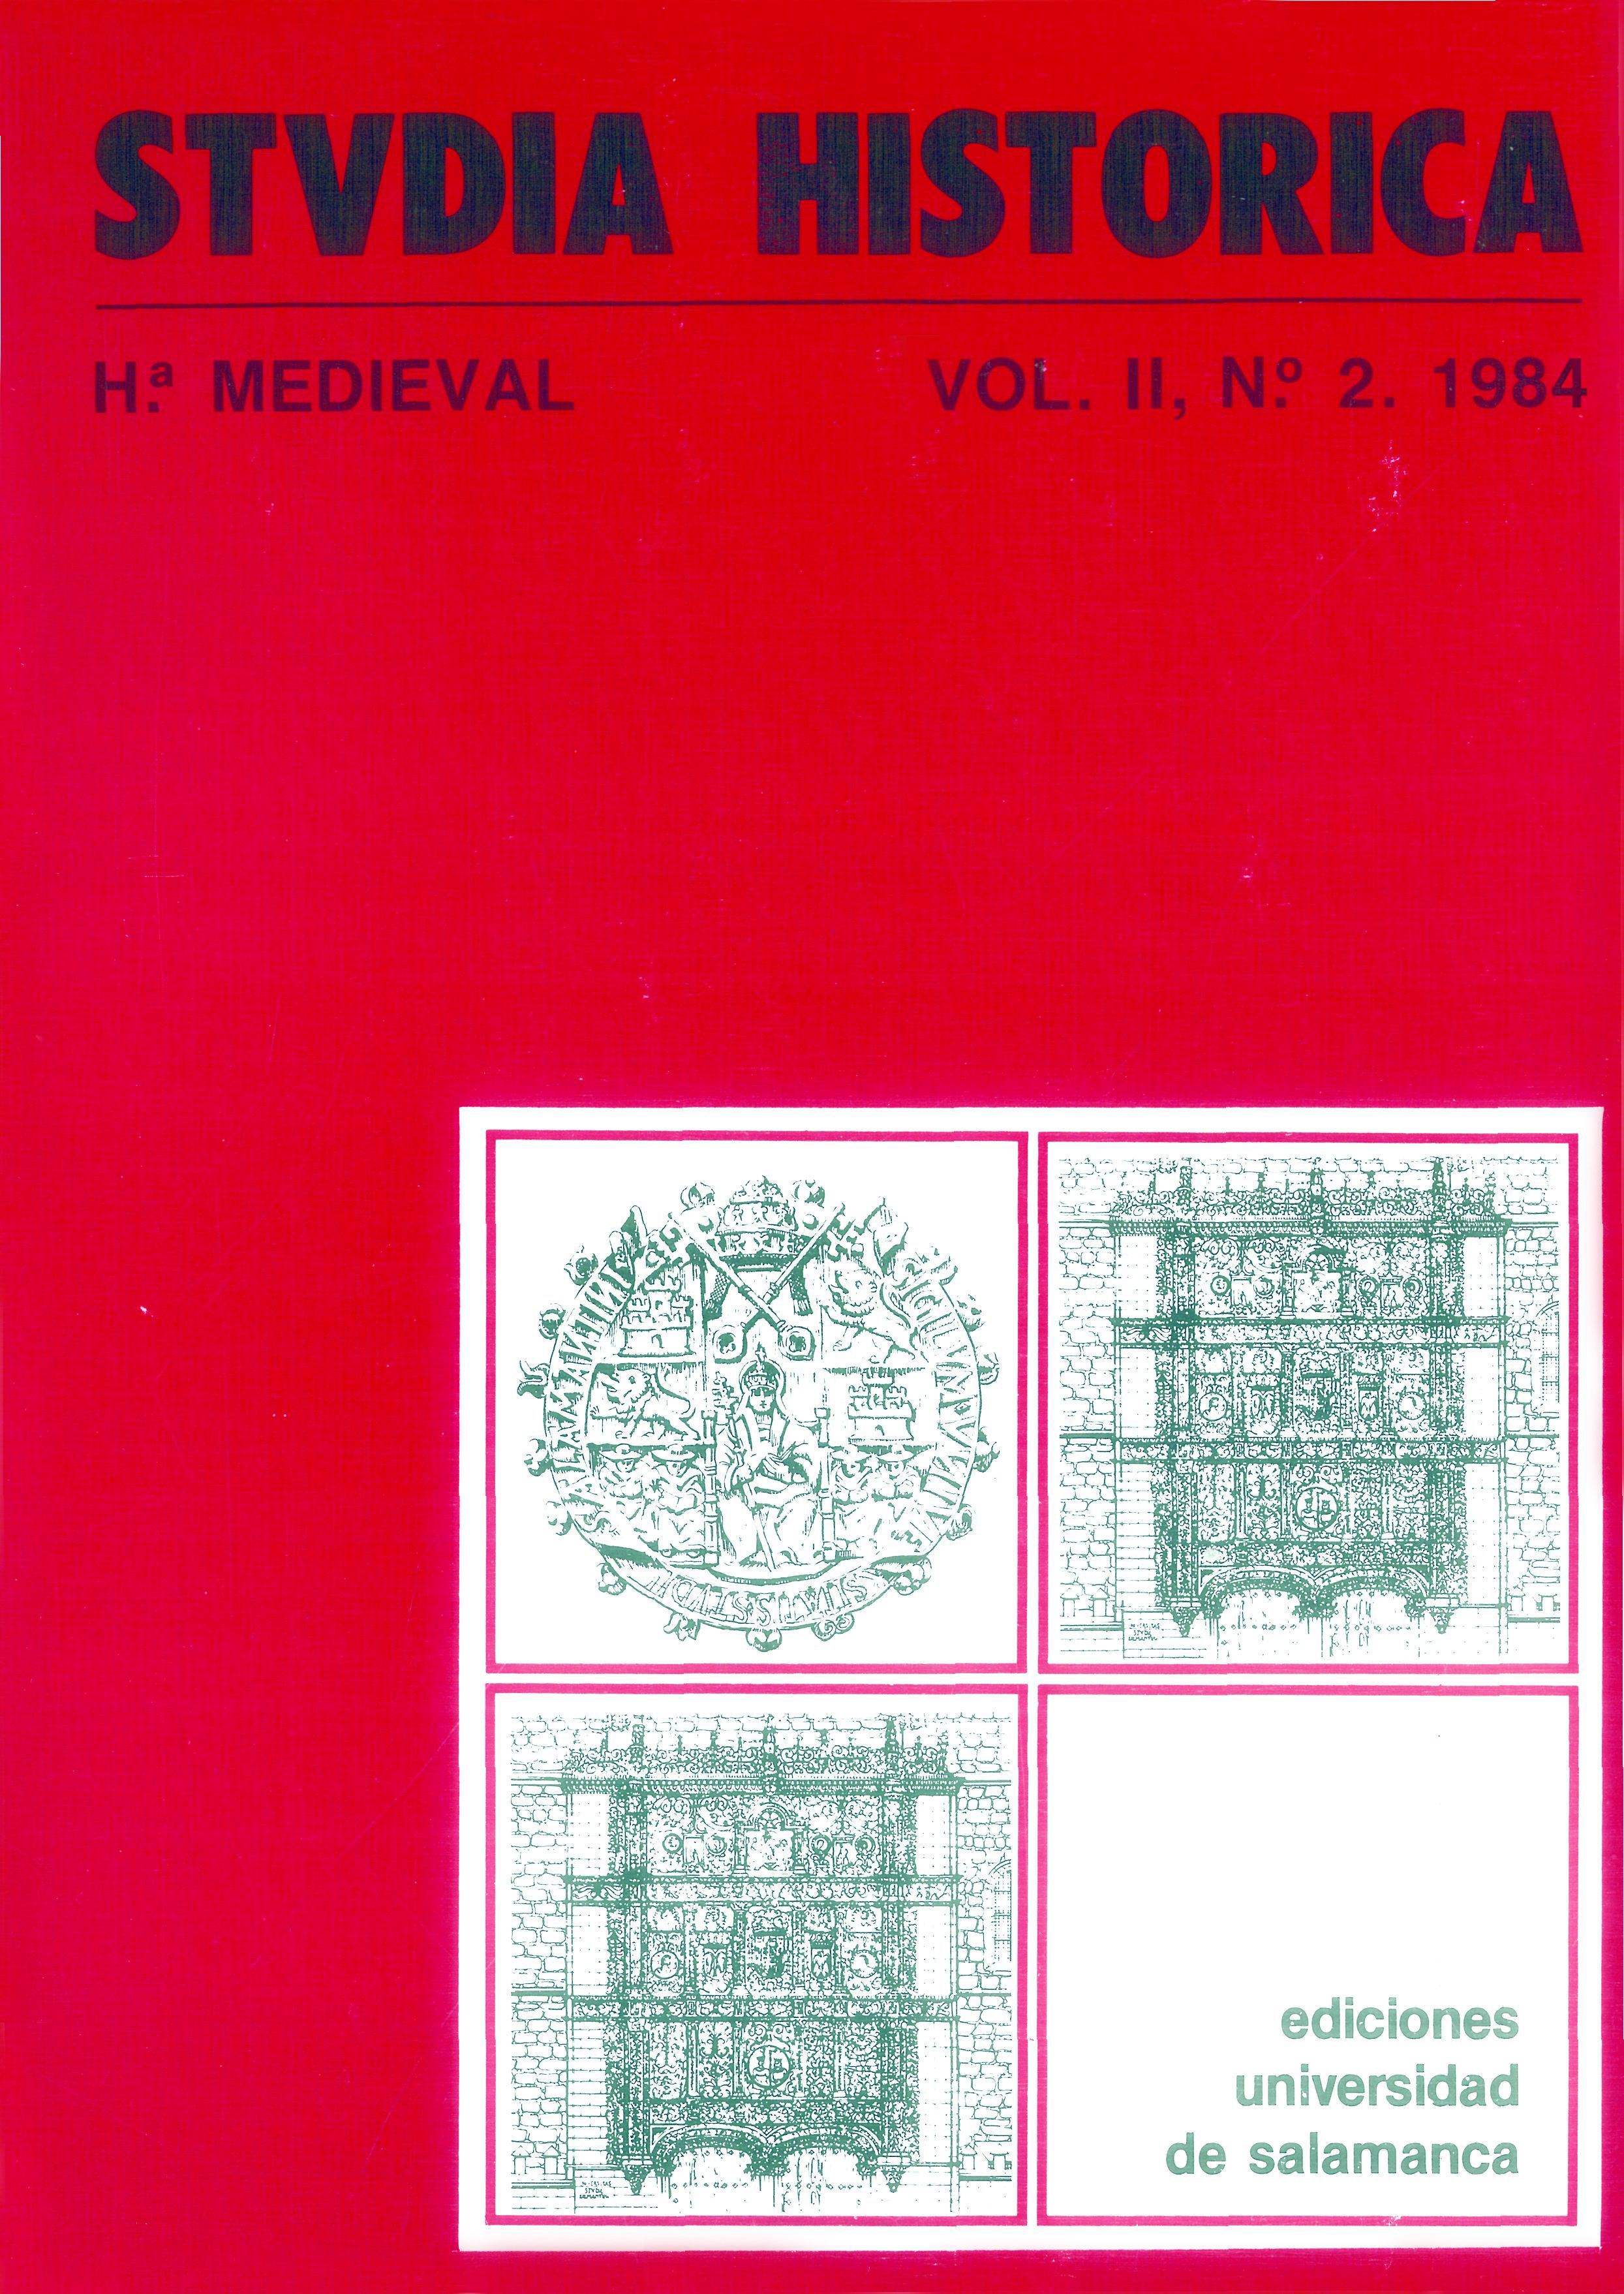                         Ver Vol. 2 (1984)
                    